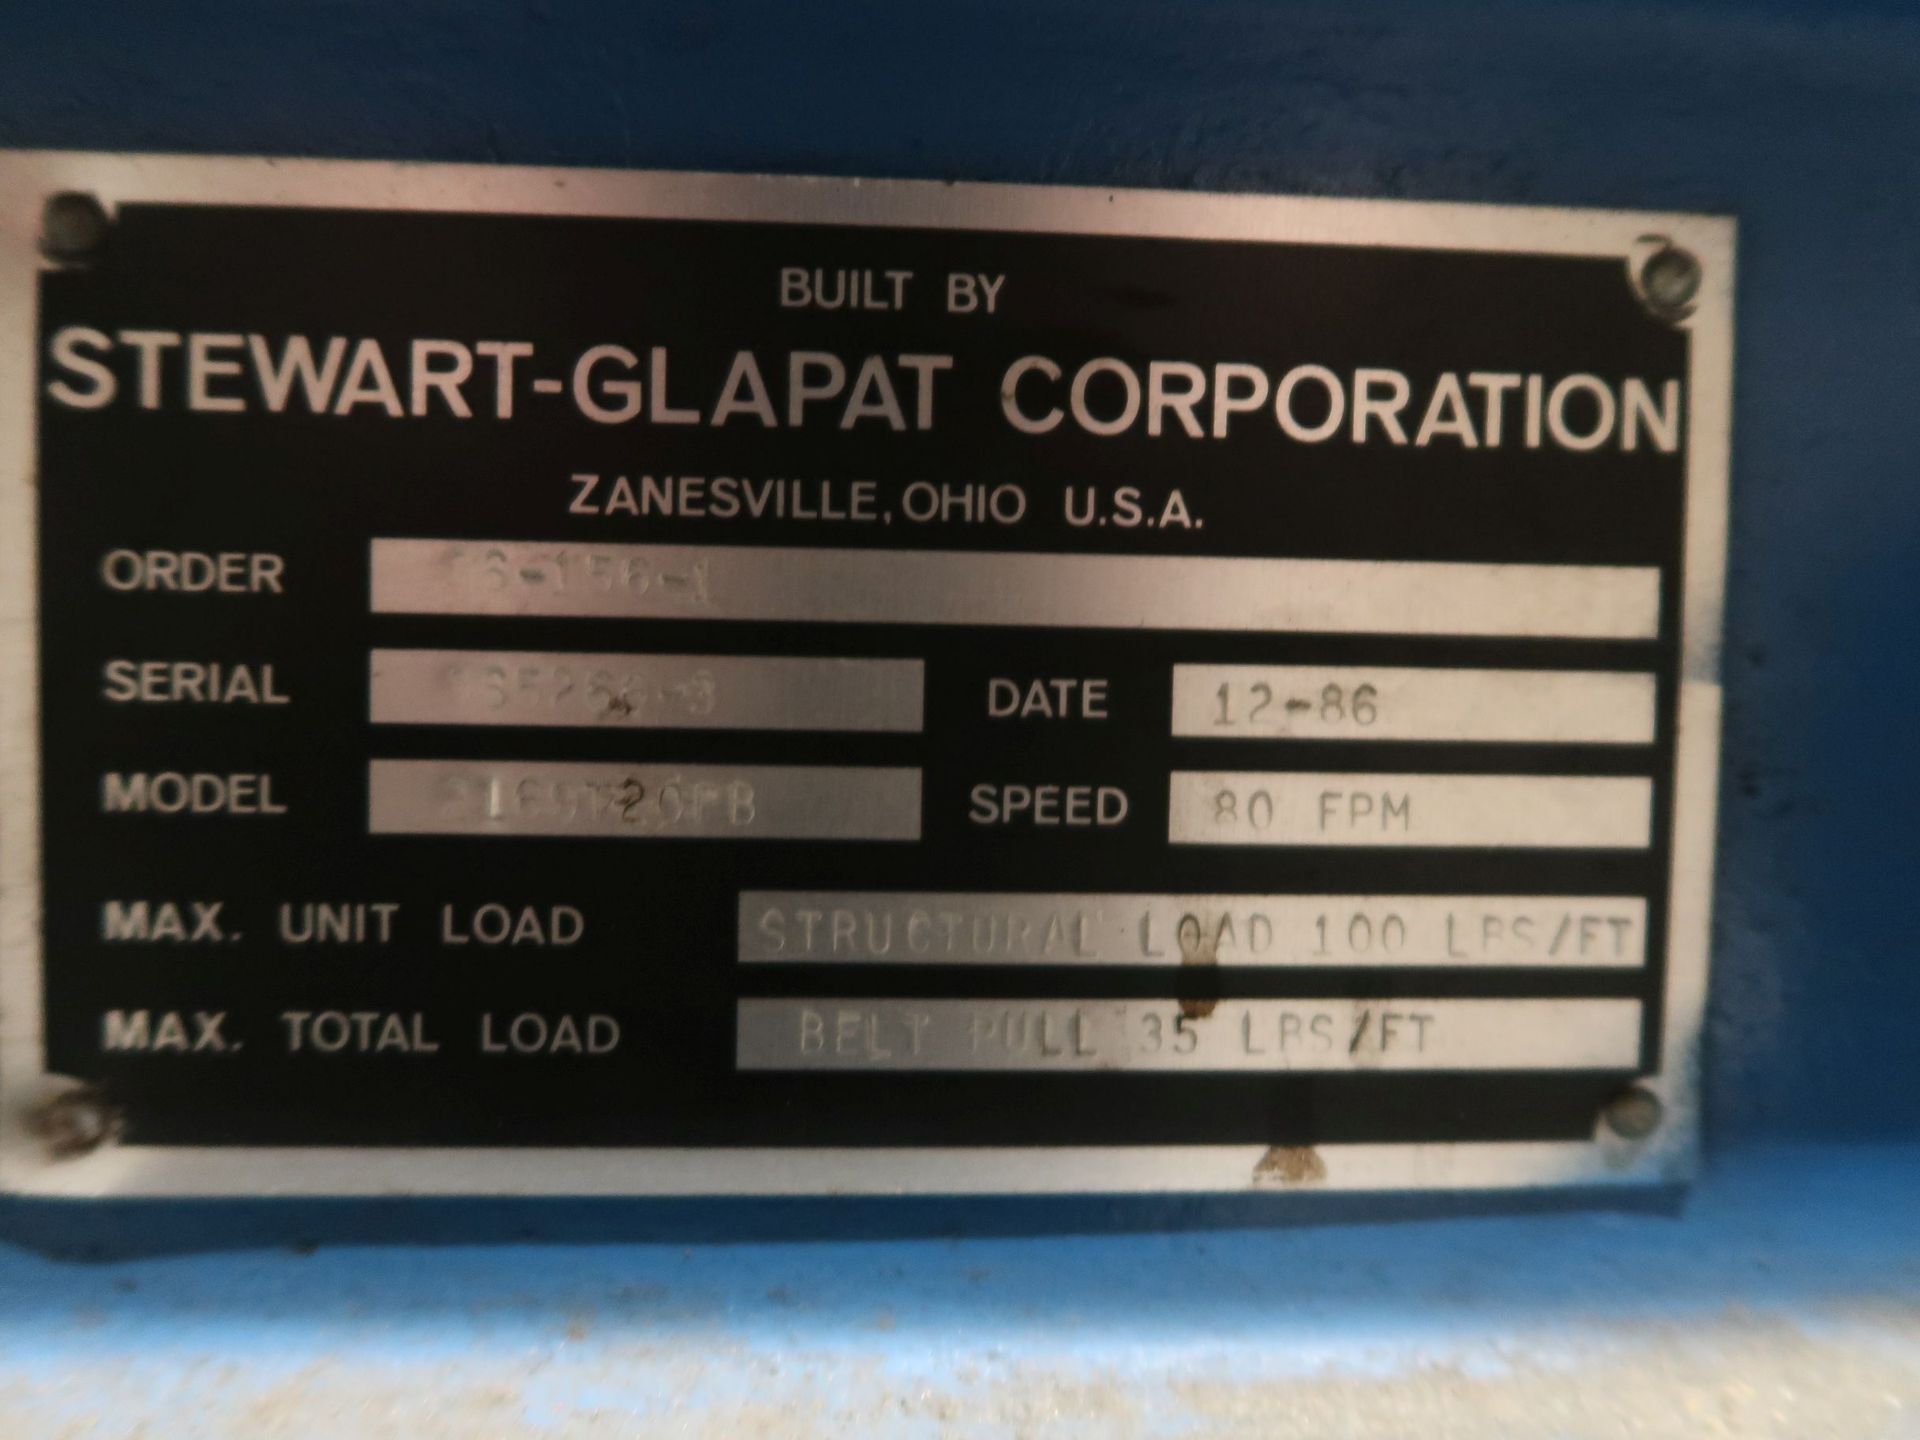 34" STEWART - GLAPAT MODEL 2169T20FB ELECTRIC BELT CONVEYOR; S/N 865266-3 - LOCATED AT 90 HAMILTON - Image 4 of 4